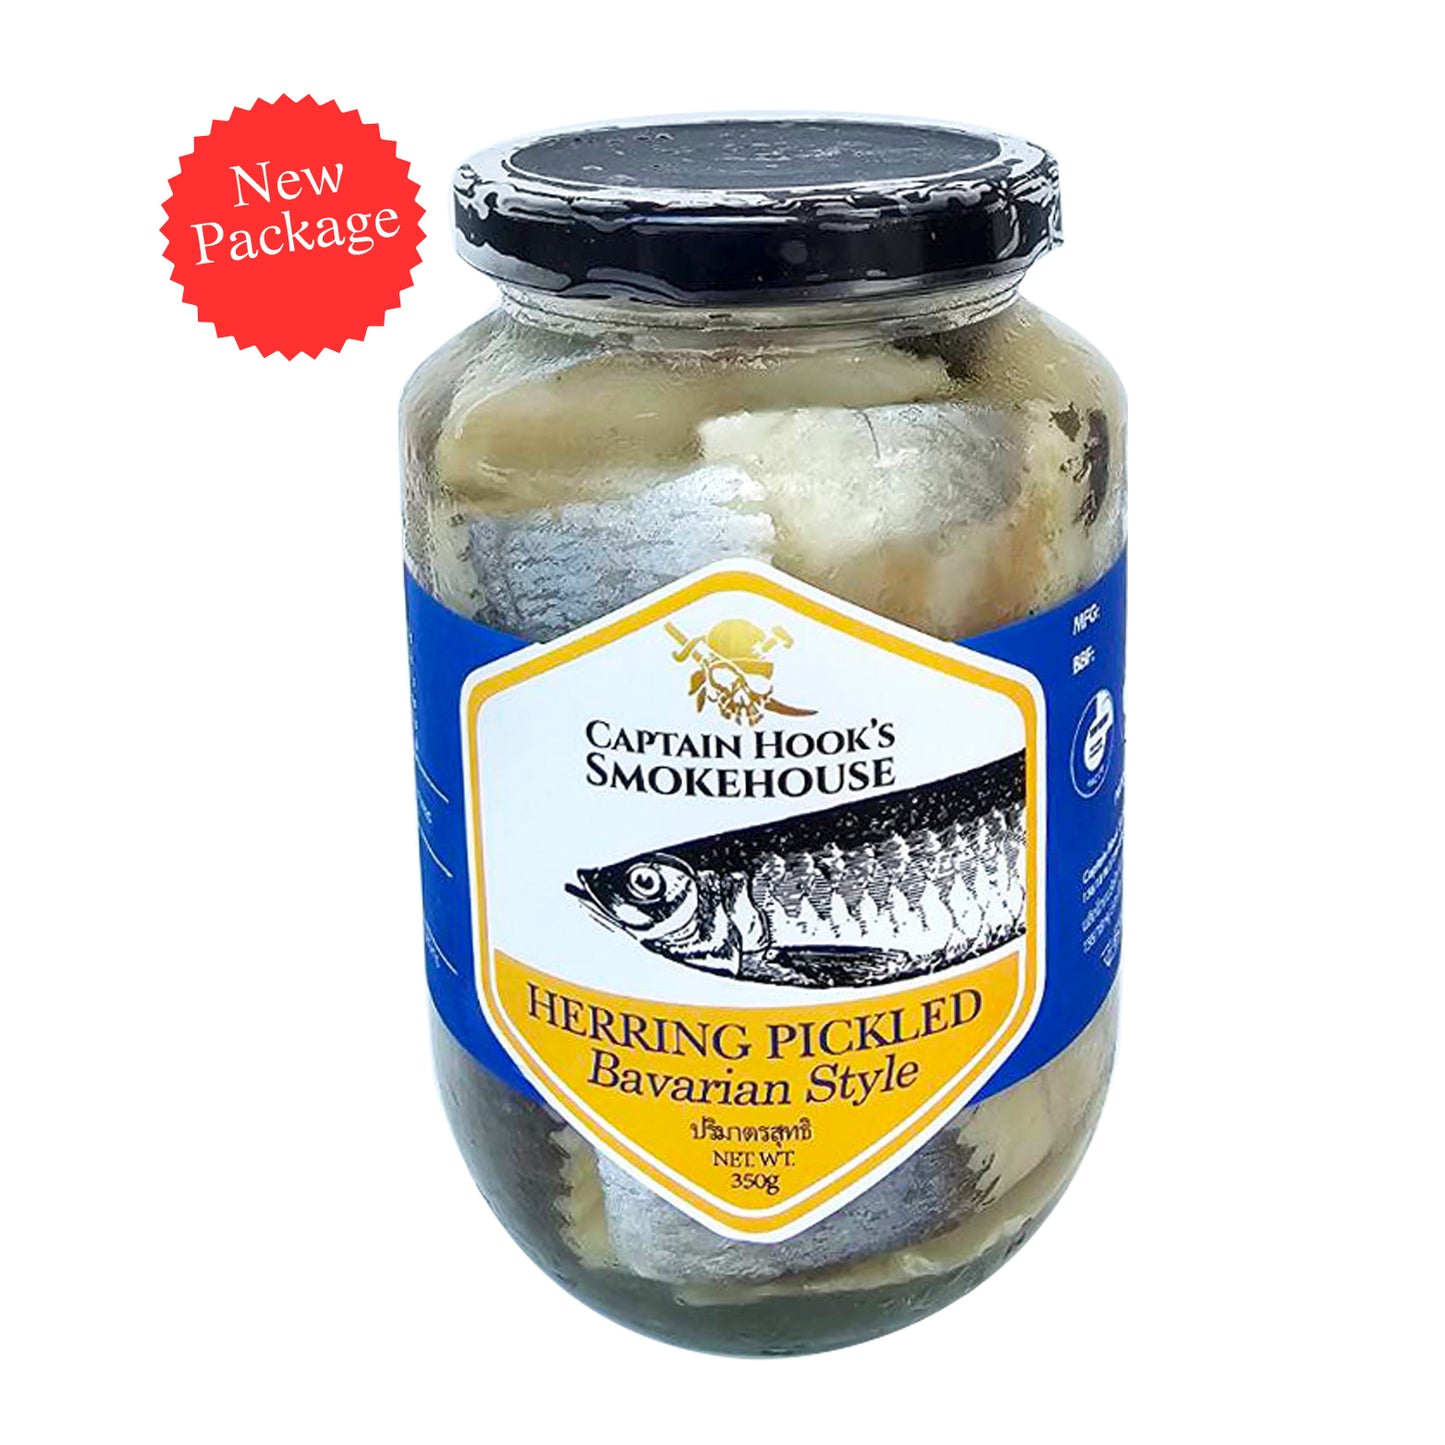 Herring Pickled Bavarian Style| ปลาแฮร์ริ่งดอง สไตล์บาวาเรียน